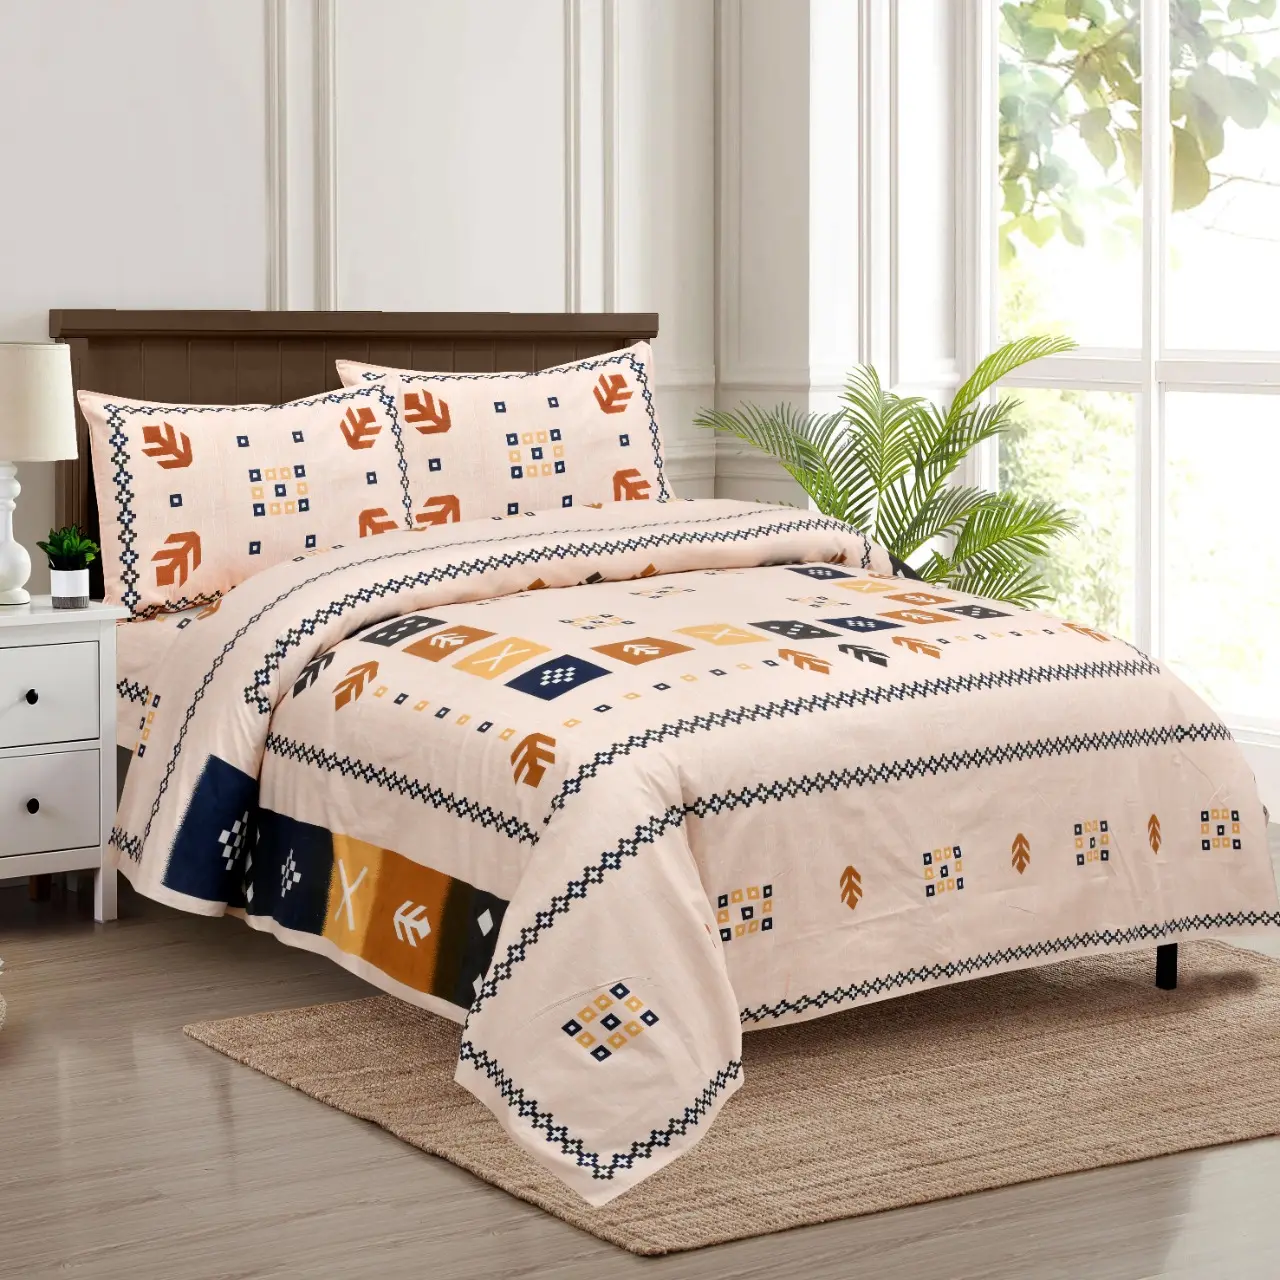 Seprai tempat tidur Super lembut indah tersedia desain baru dicetak indah 100% katun dalam jumlah besar dengan harga grosir dari India